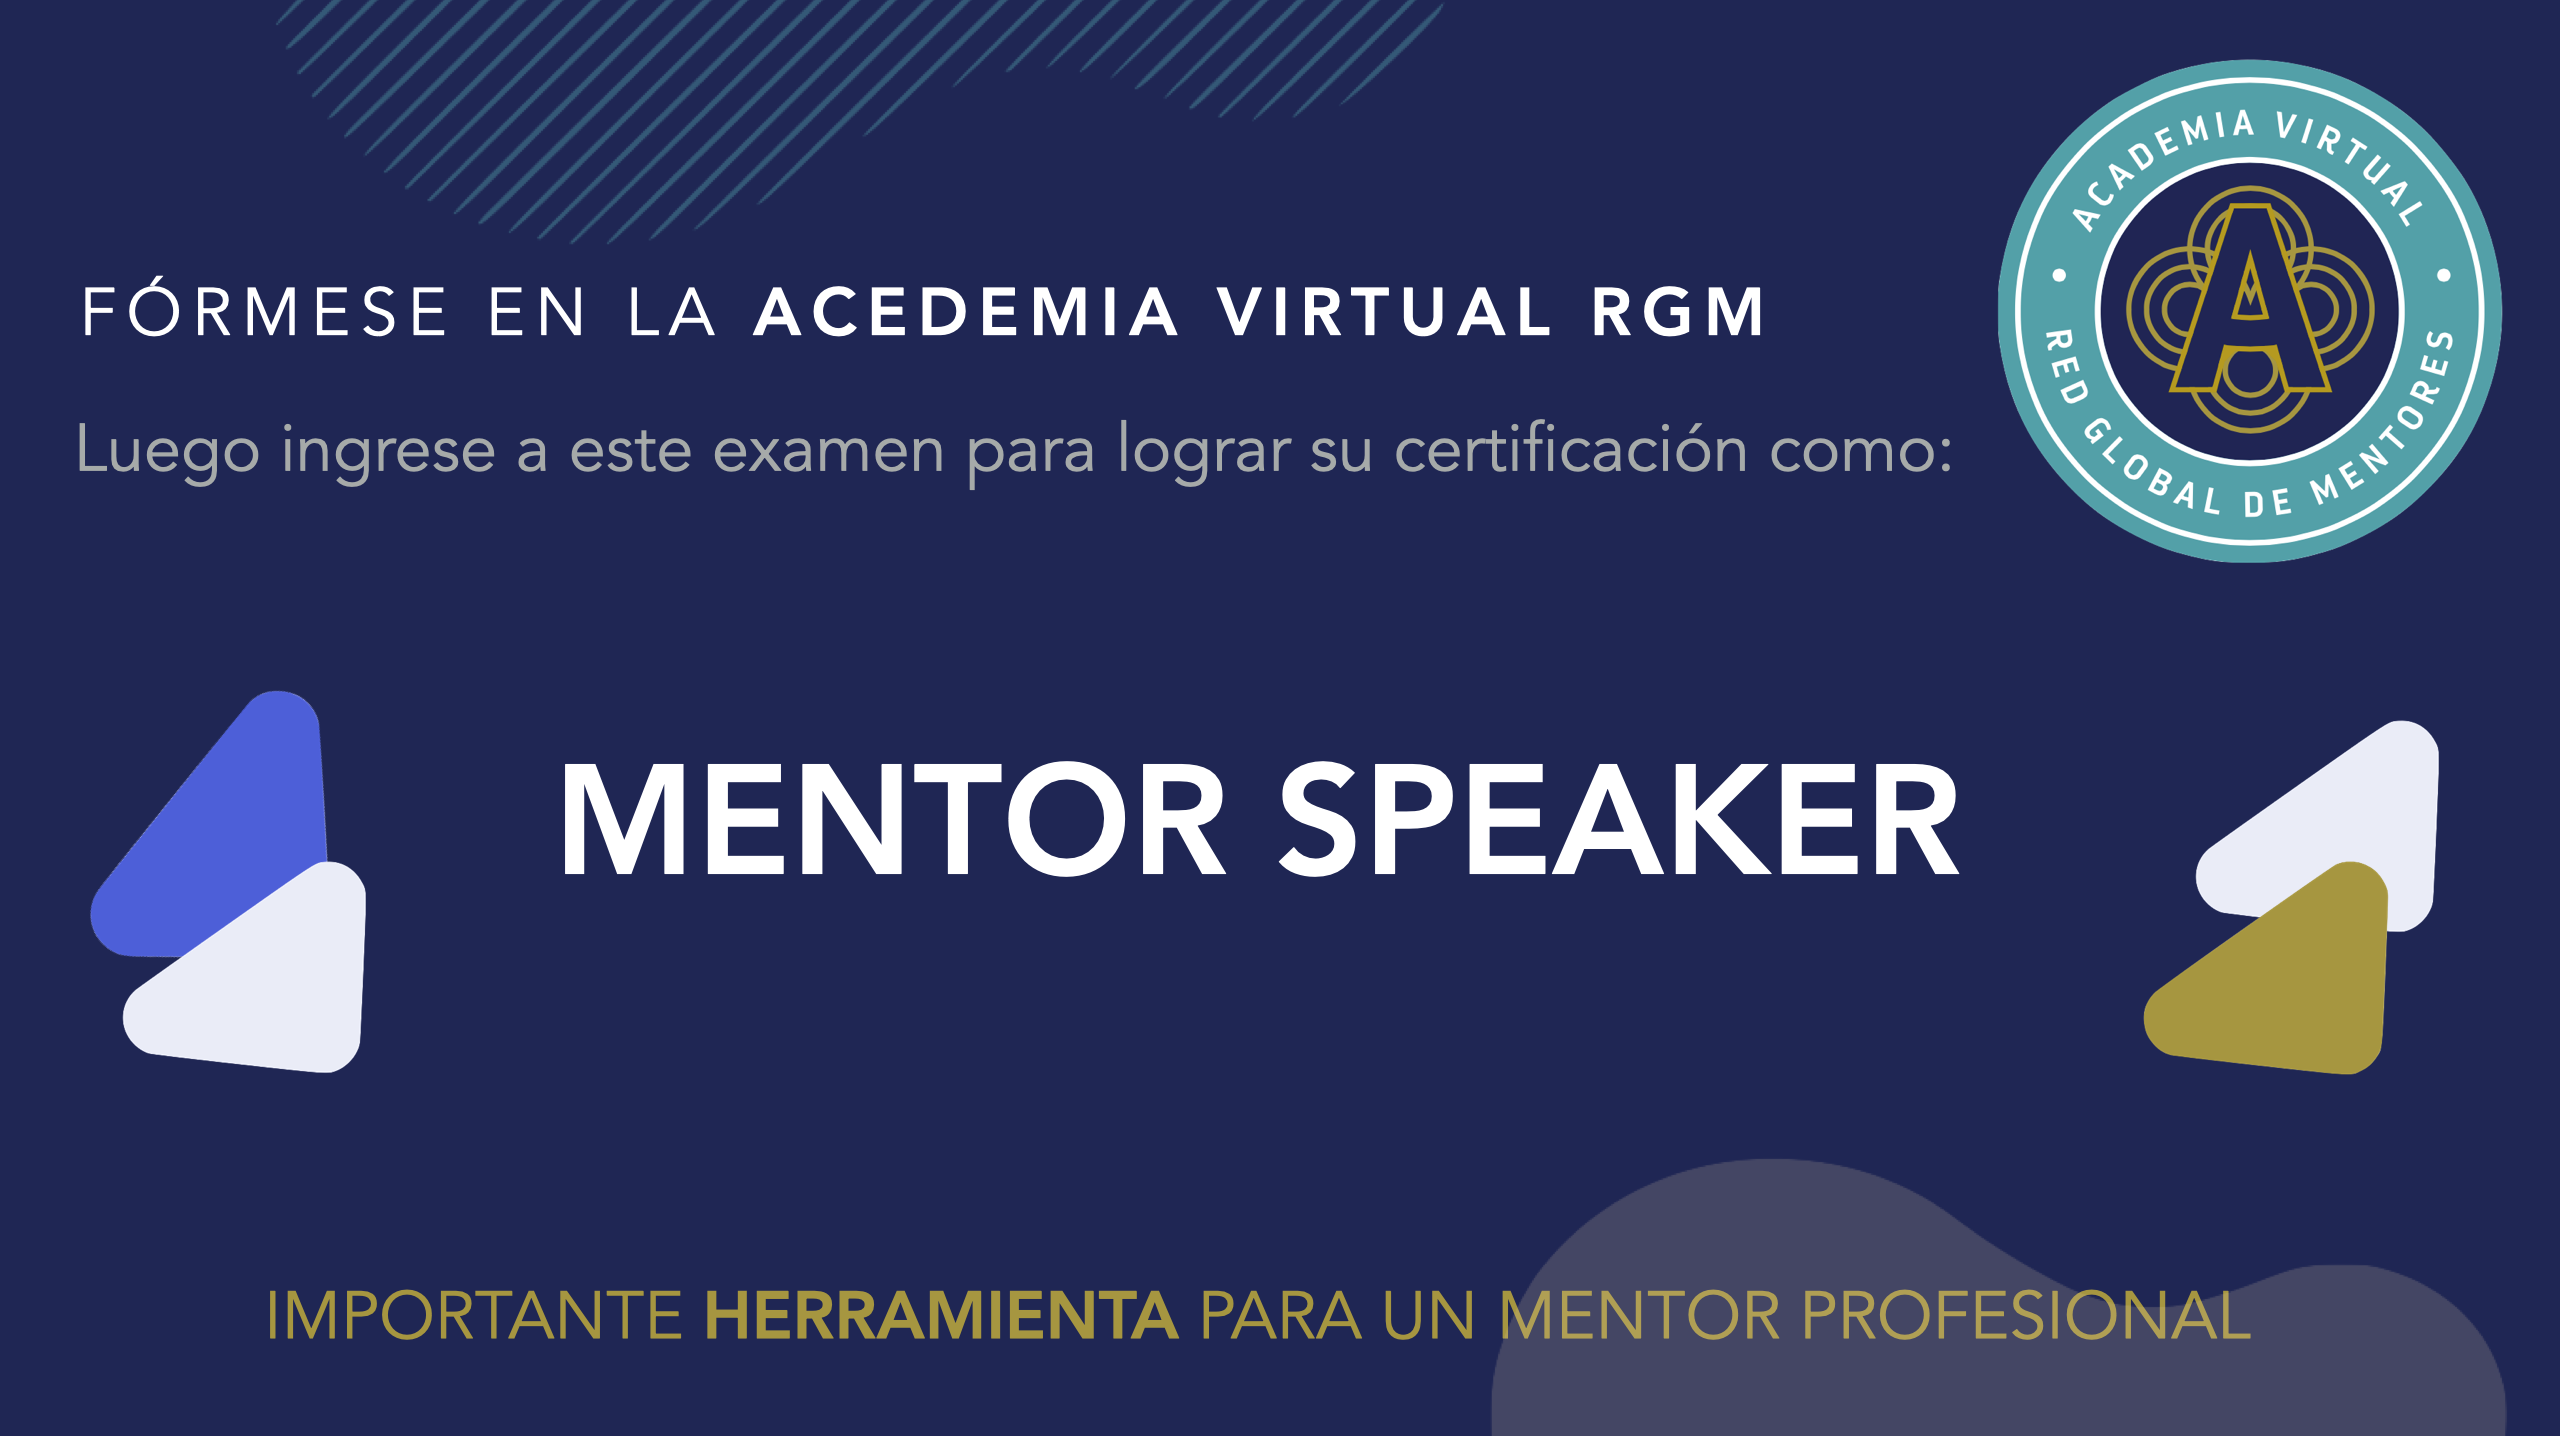 Herramienta: Mentor Speaker